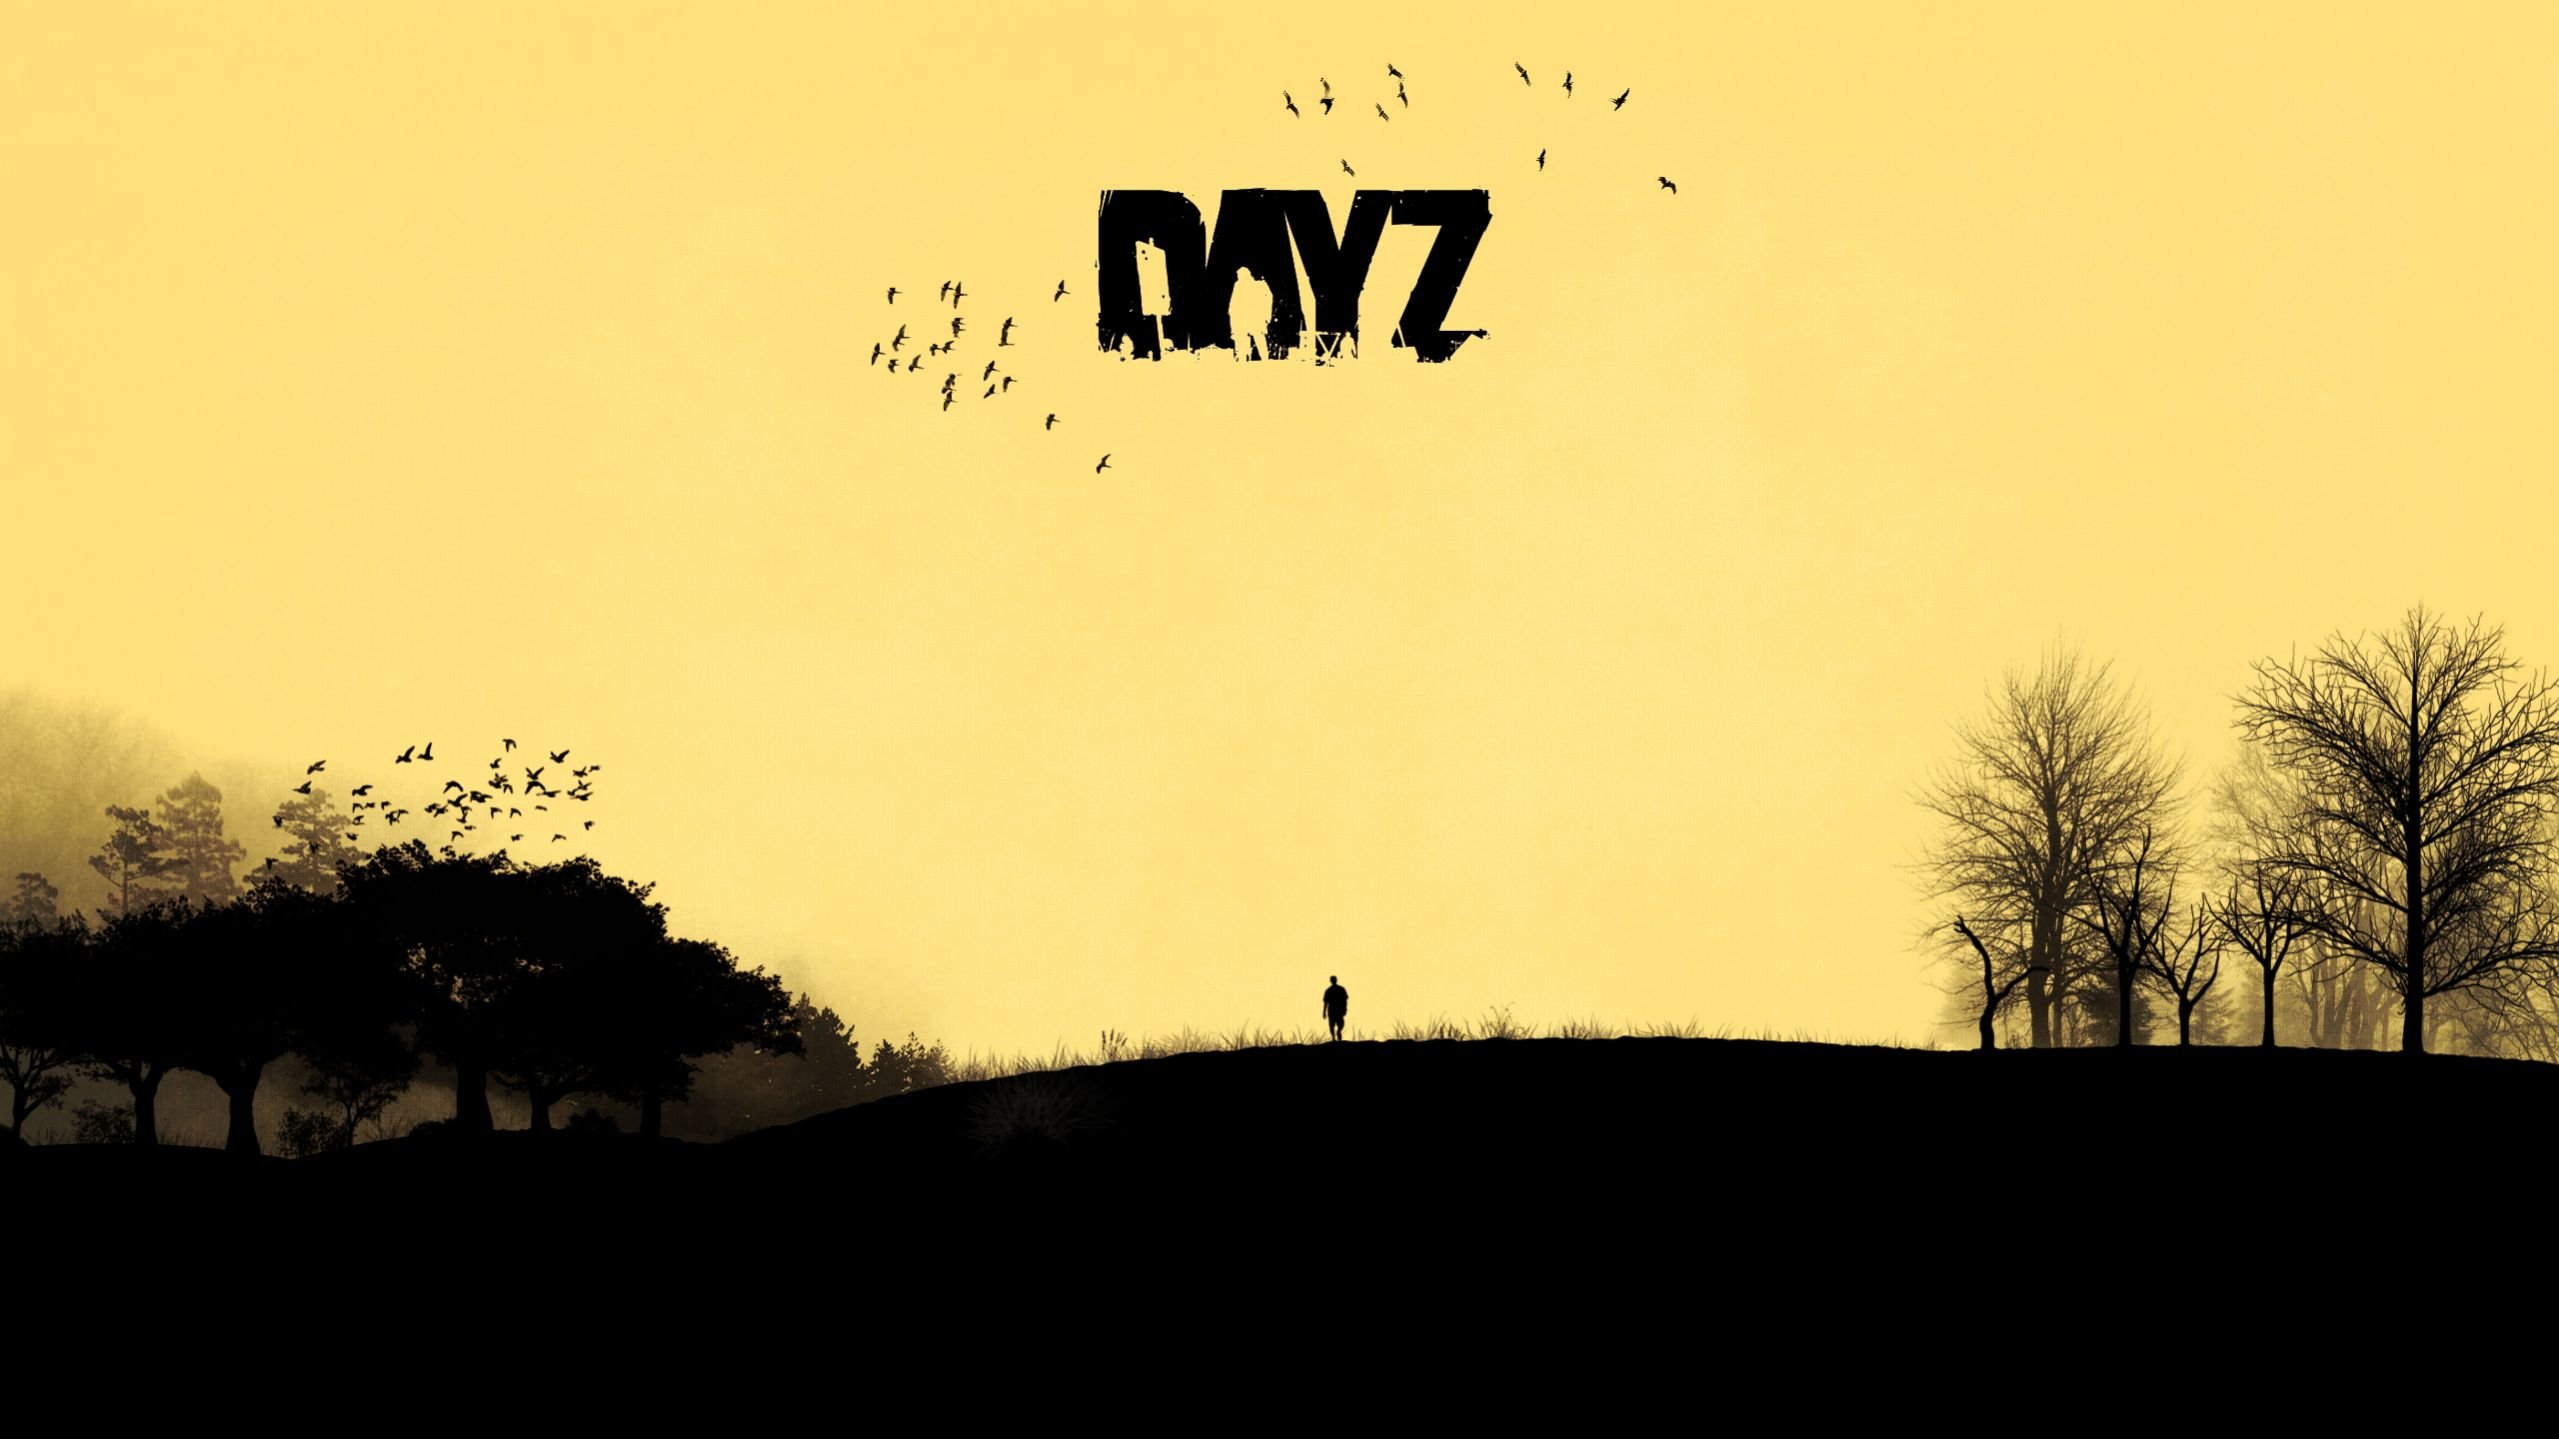 dayz, Survival, Horror, Zombie, Apocalyptic Wallpaper